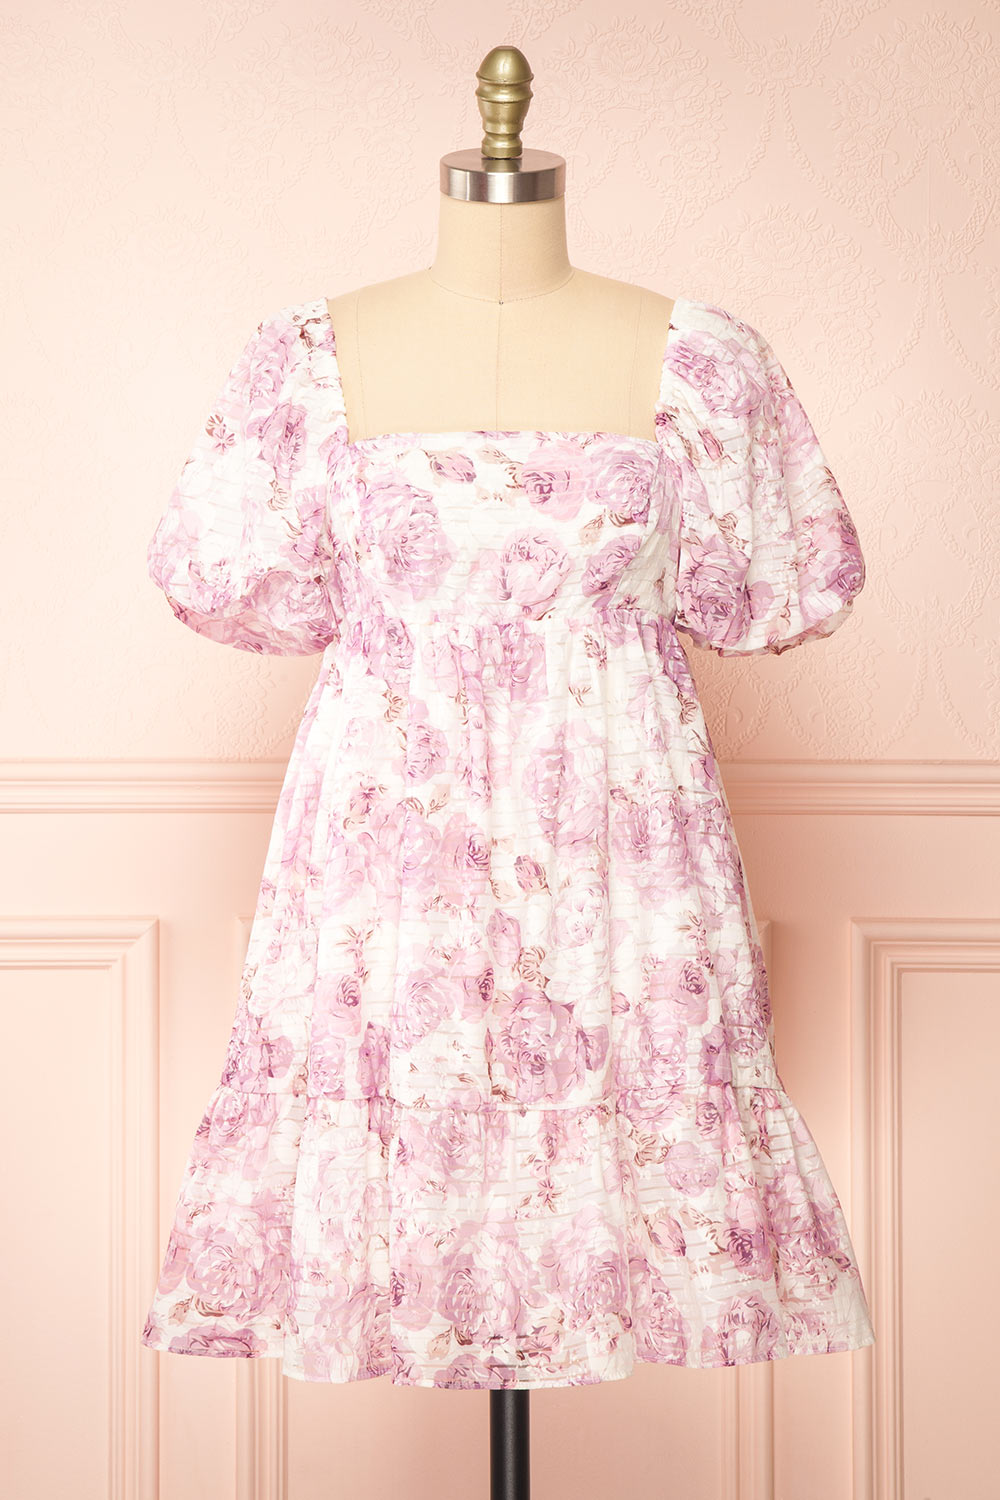 Satenn Short Floral Babydoll Dress | Boutique 1861 front view